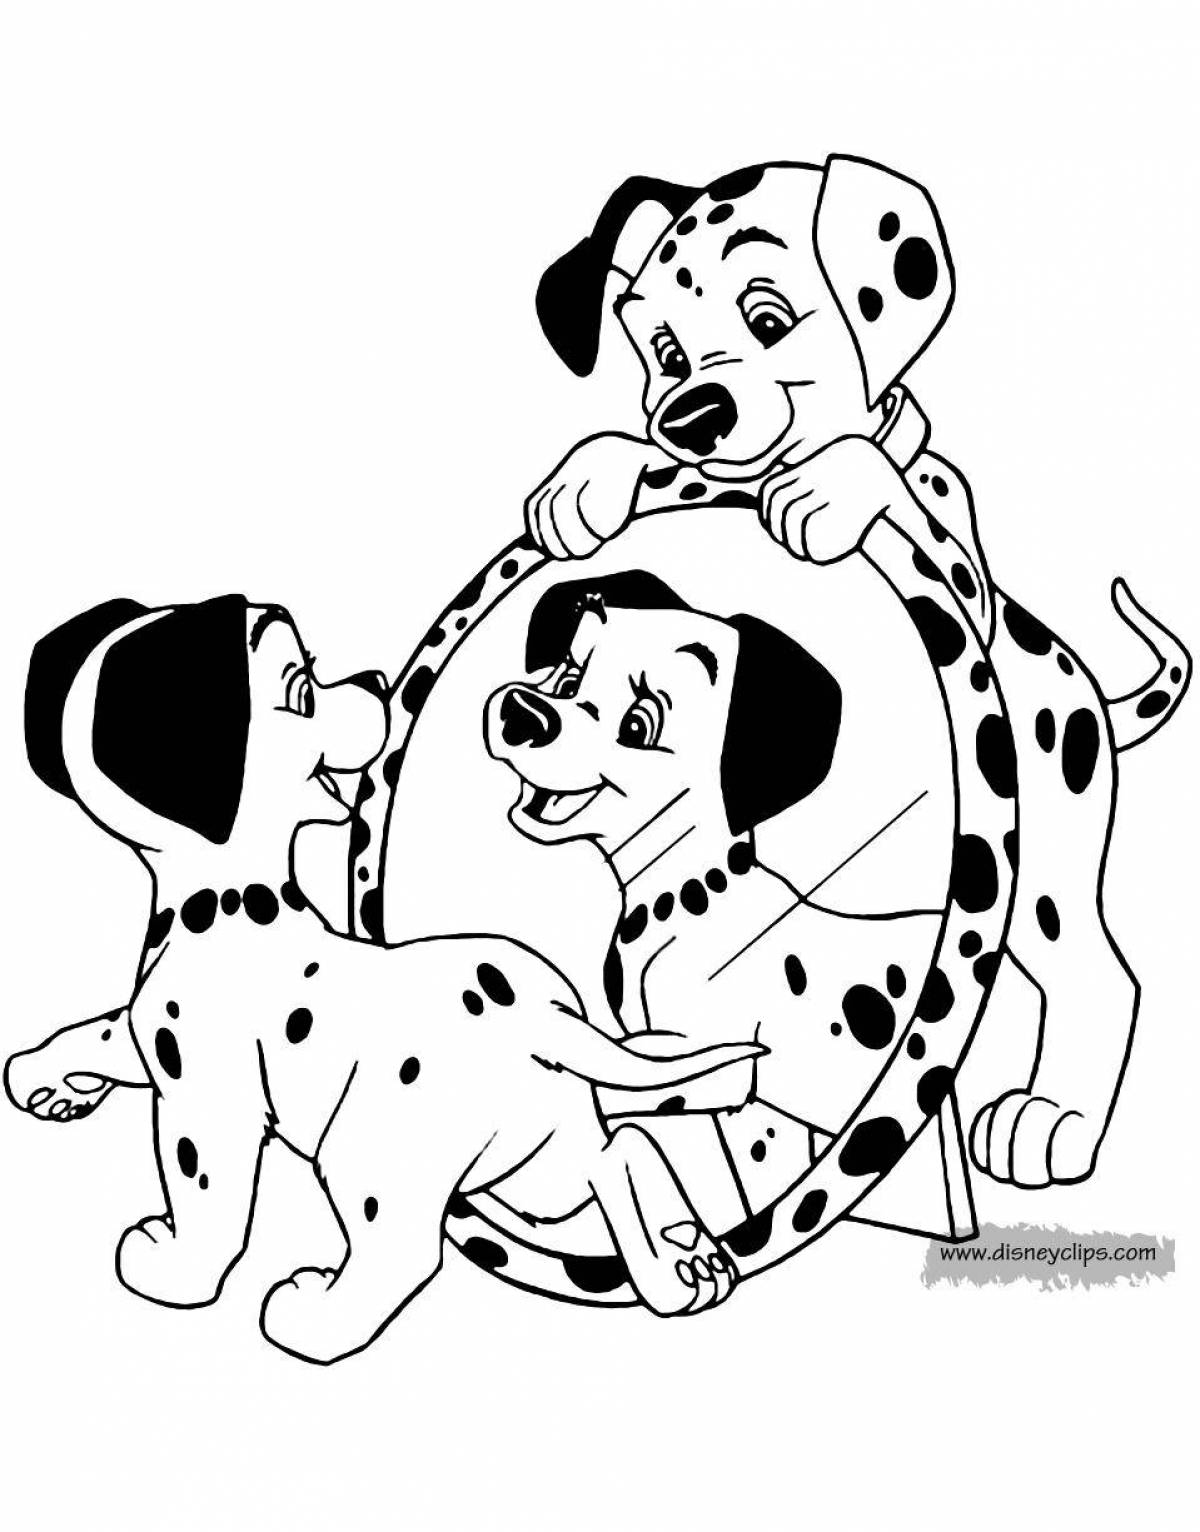 Adorable Dalmatian coloring book for kids